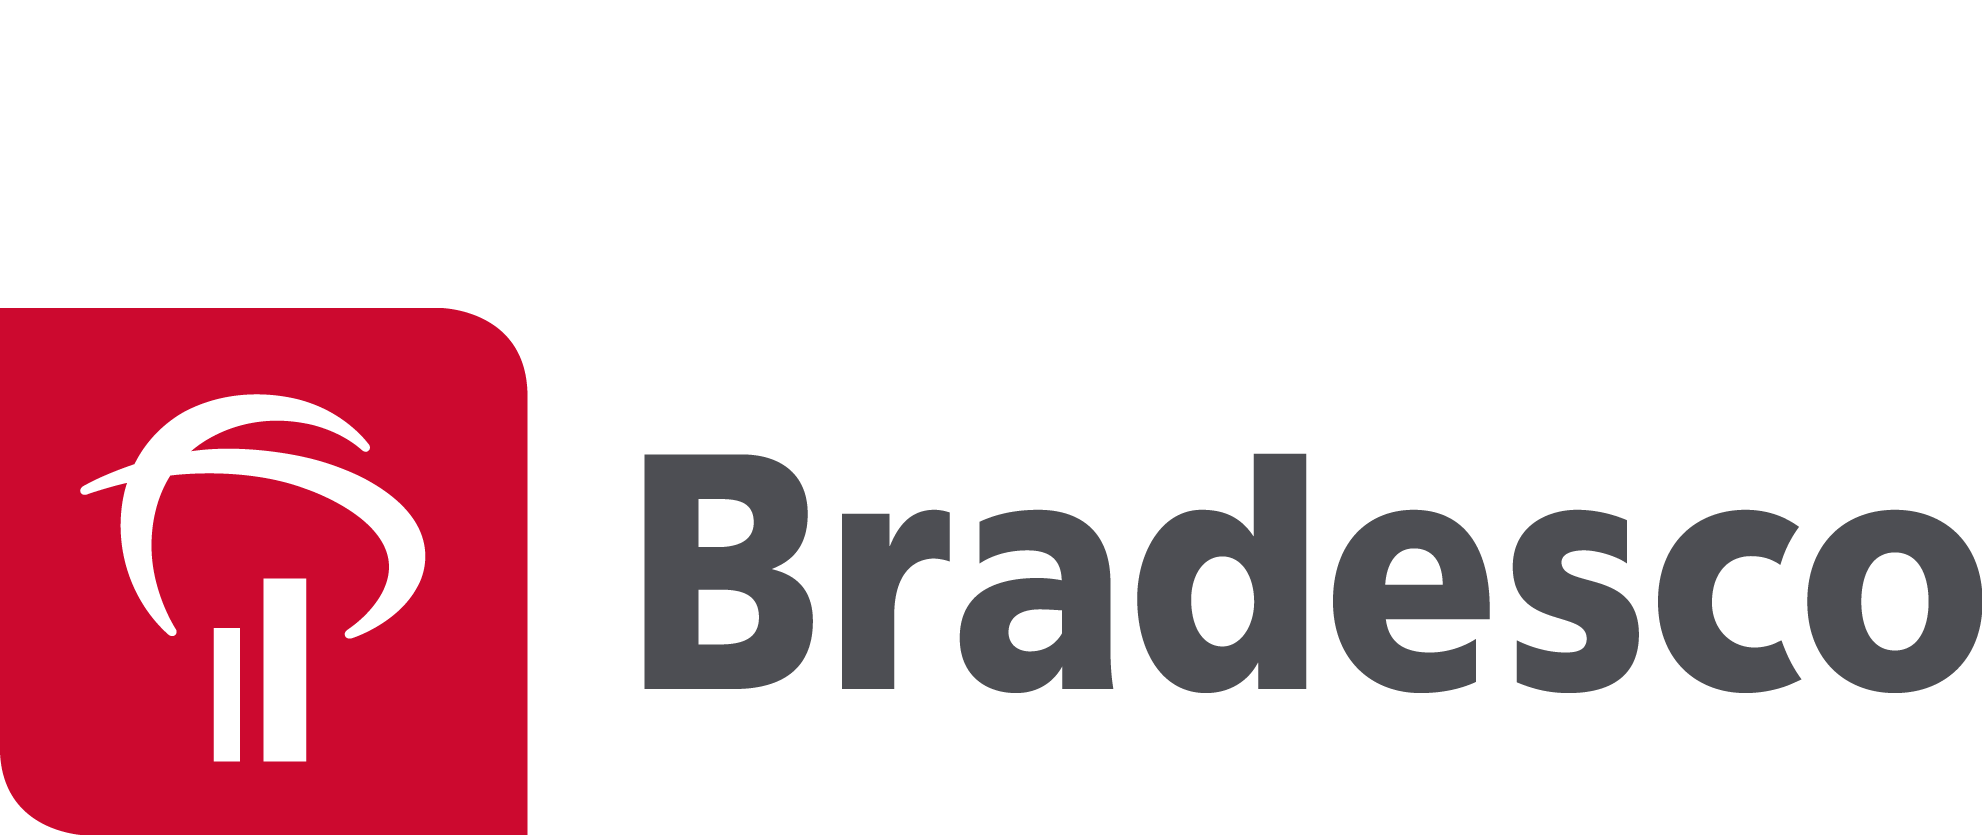 Banco Bradesco Logo - Banco Bradesco, Transparent background PNG HD thumbnail